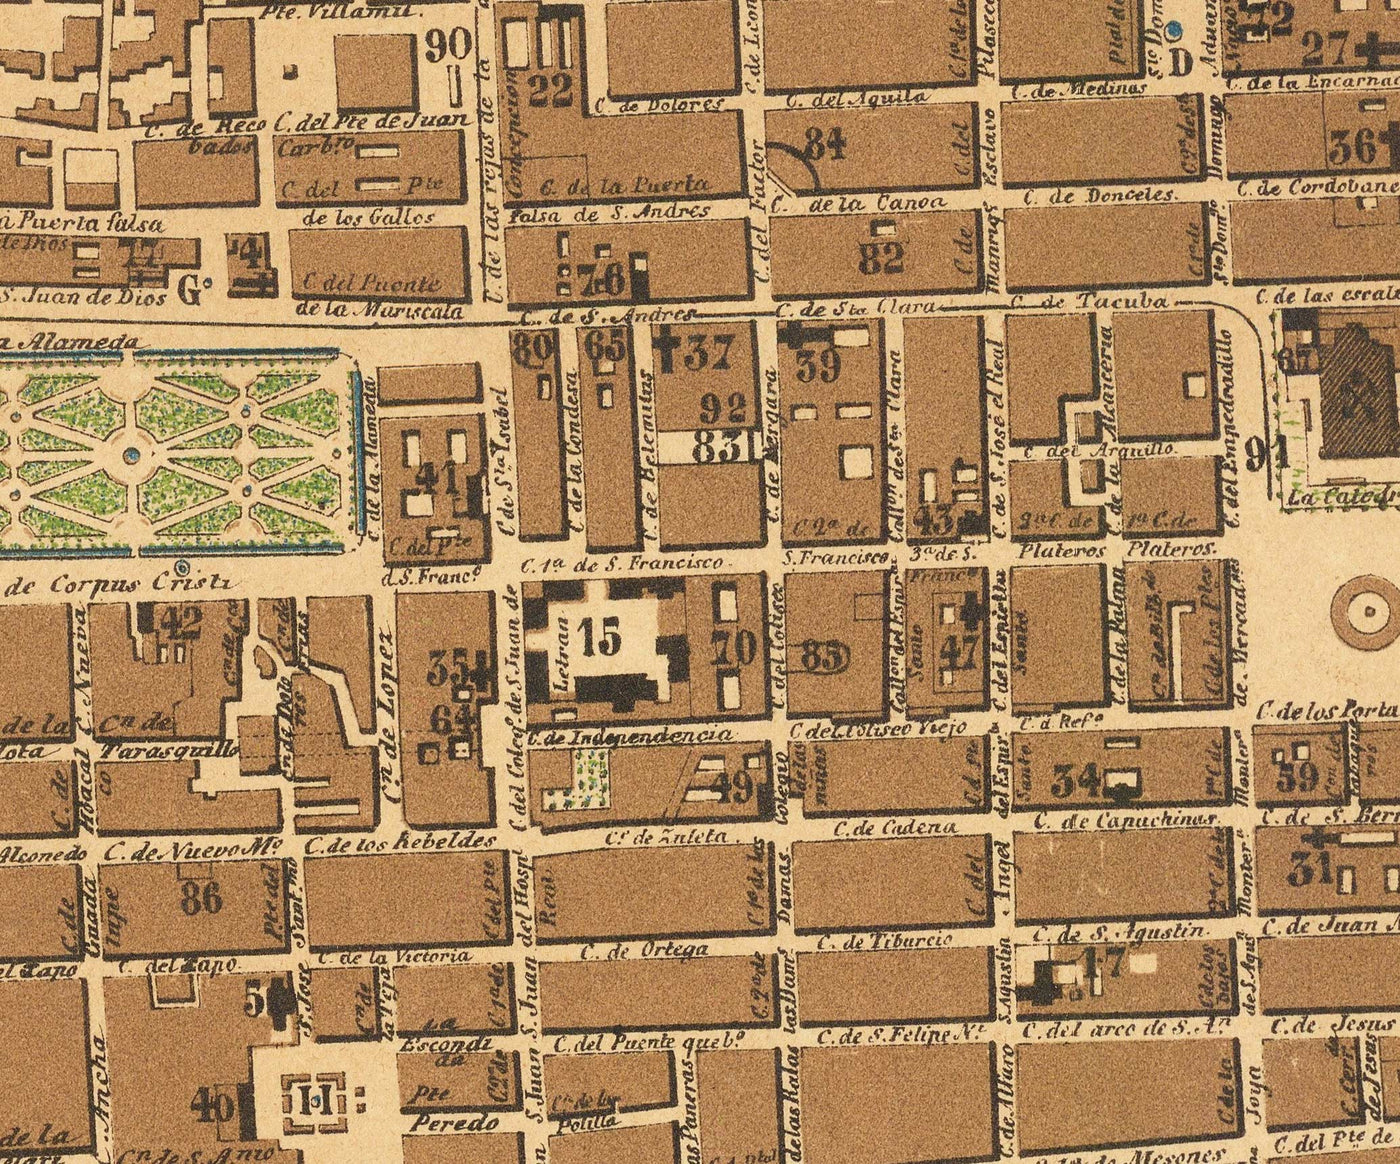 Old Map of Mexico City, 1858 - CDMX, Historic Center, Centro, Metropolitan Cathedral, Alameda Park